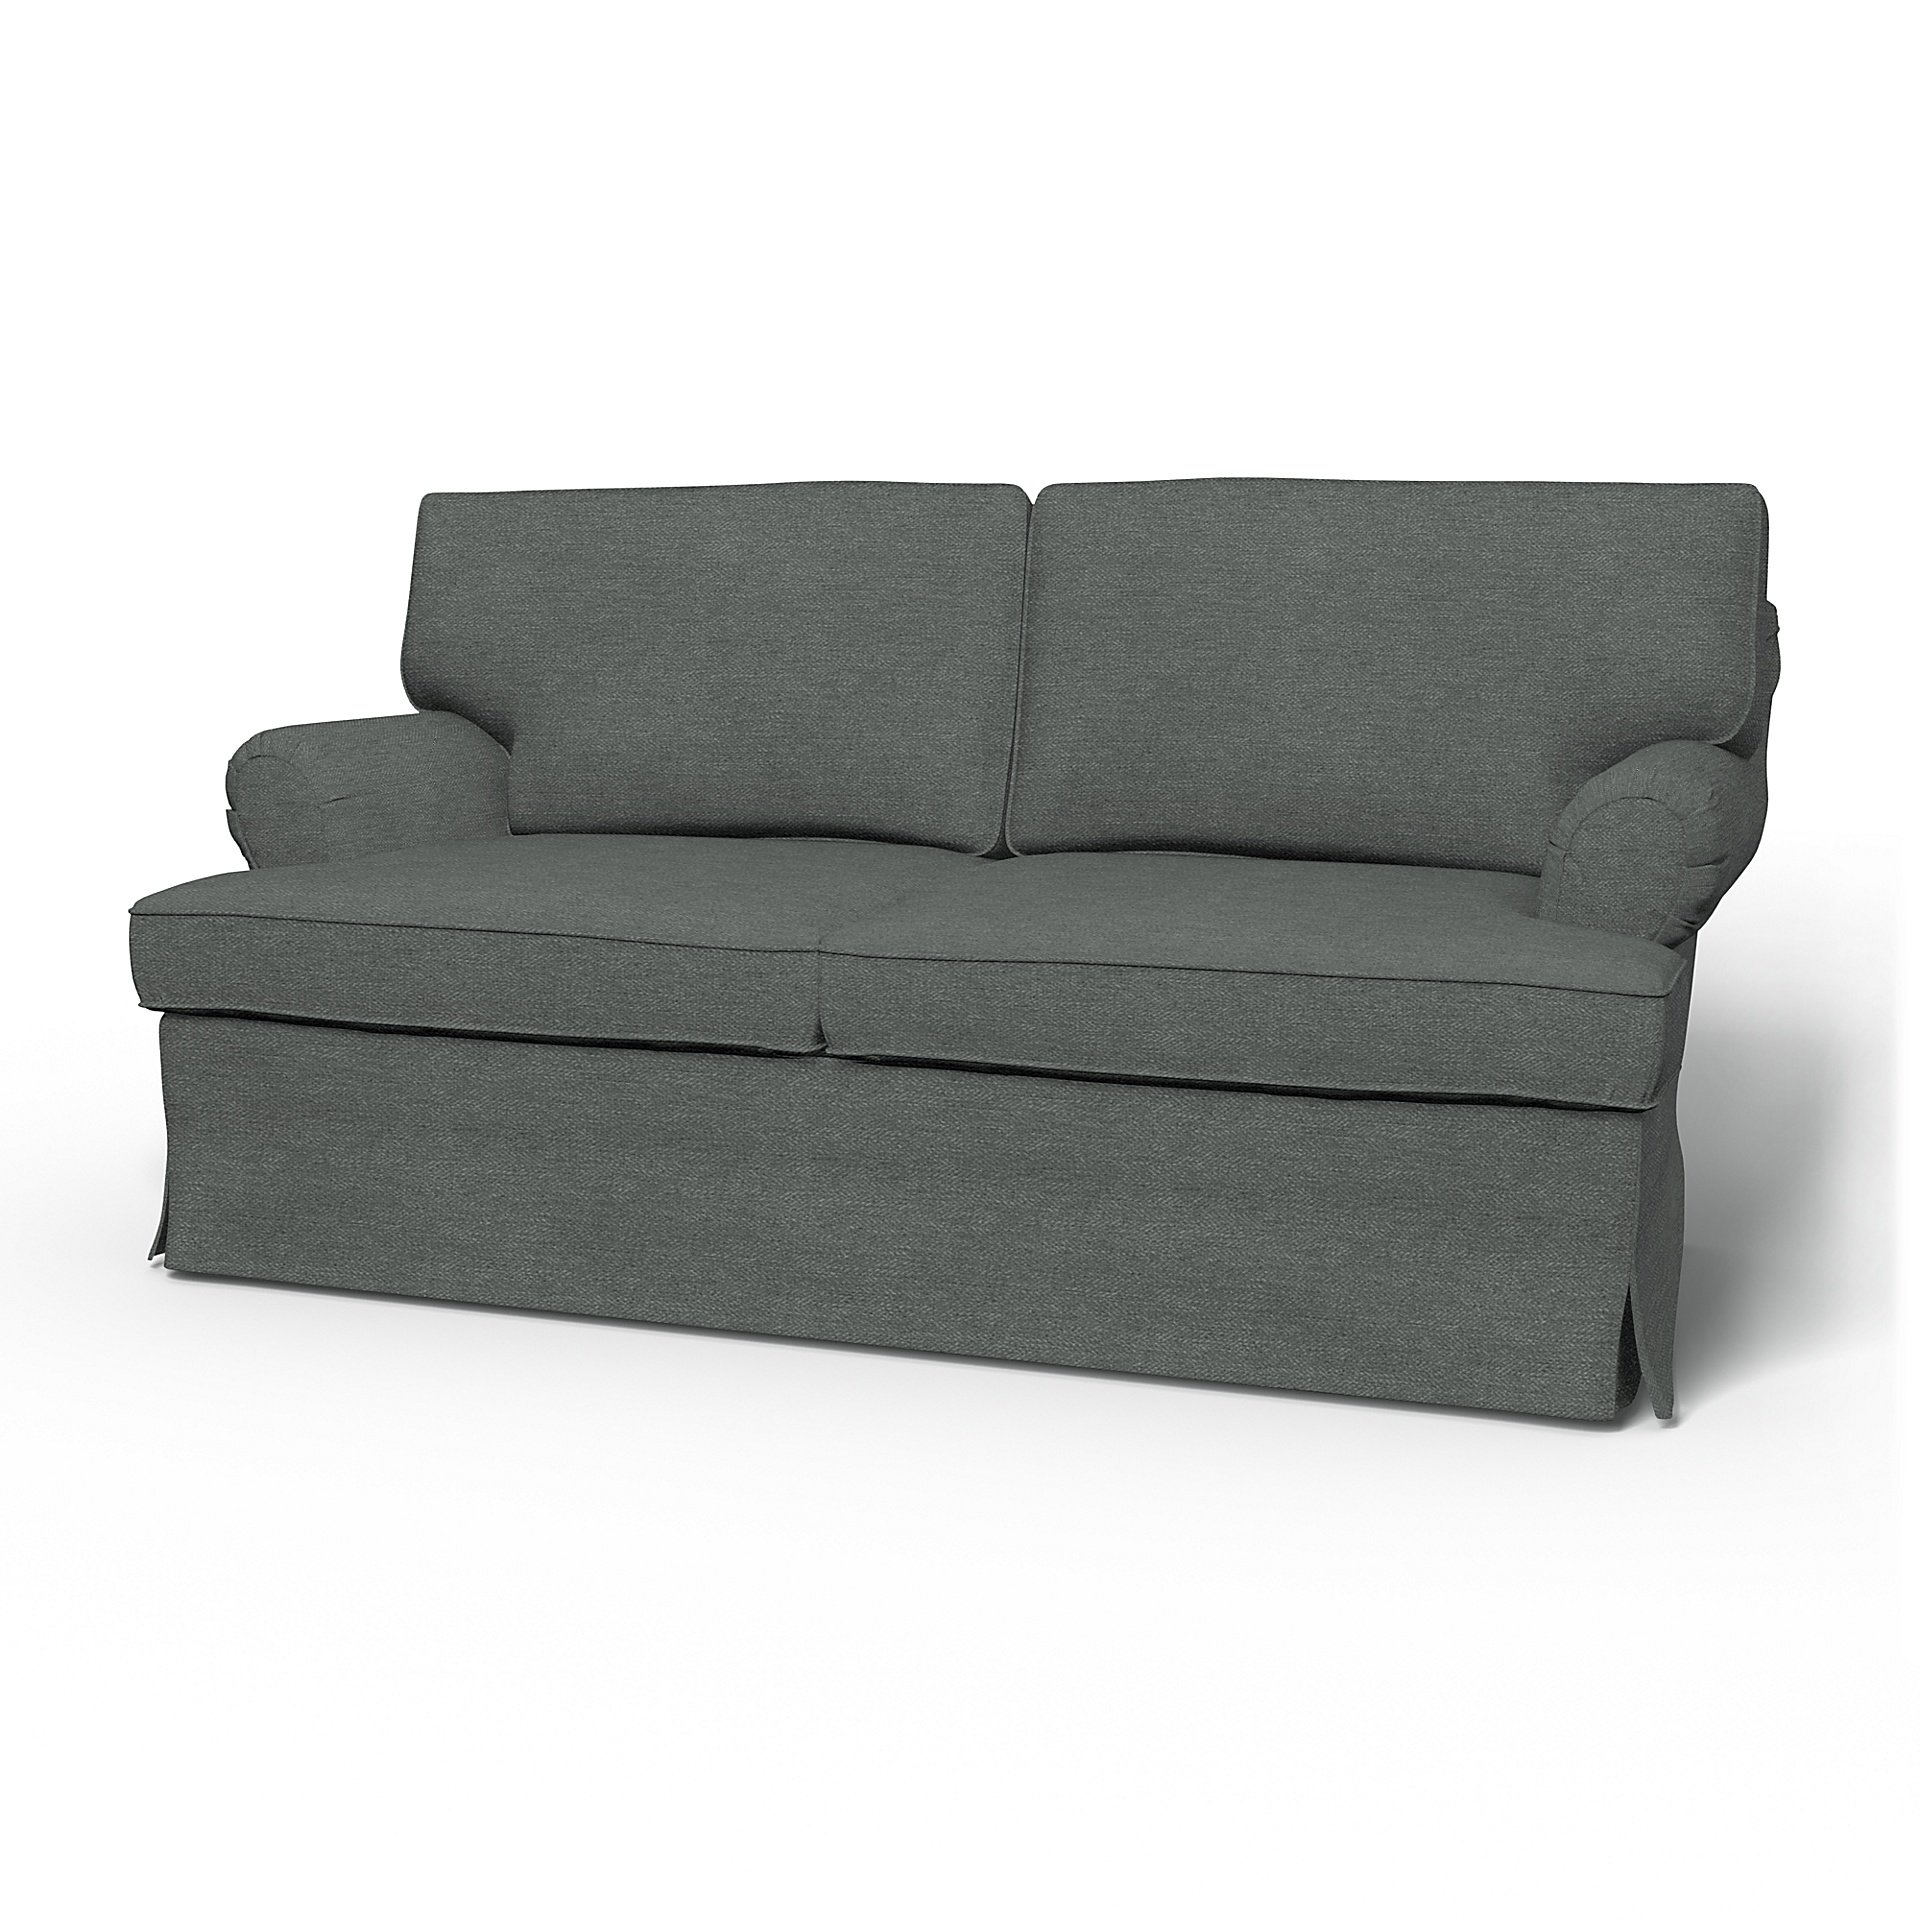 IKEA - Stockholm 2 Seater Sofa Cover (1994-2000), Laurel, Boucle & Texture - Bemz